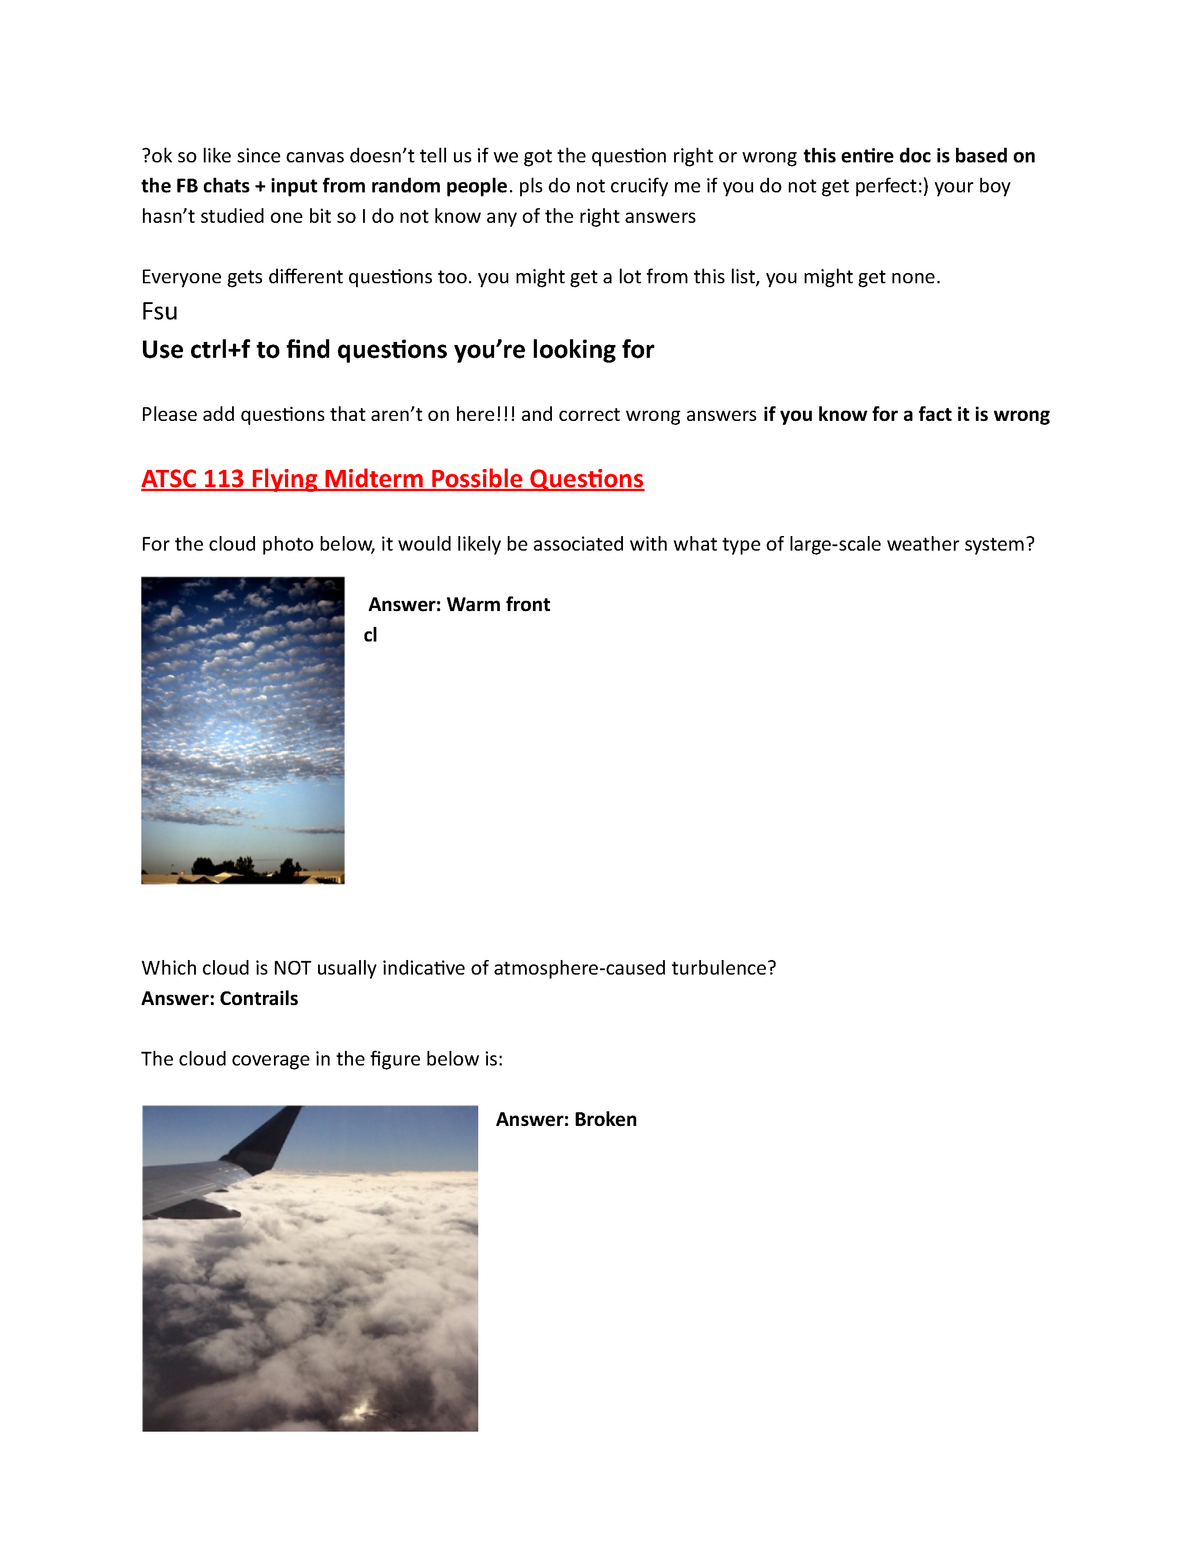 UBC ATSC 113 - Frontal hazards to flight